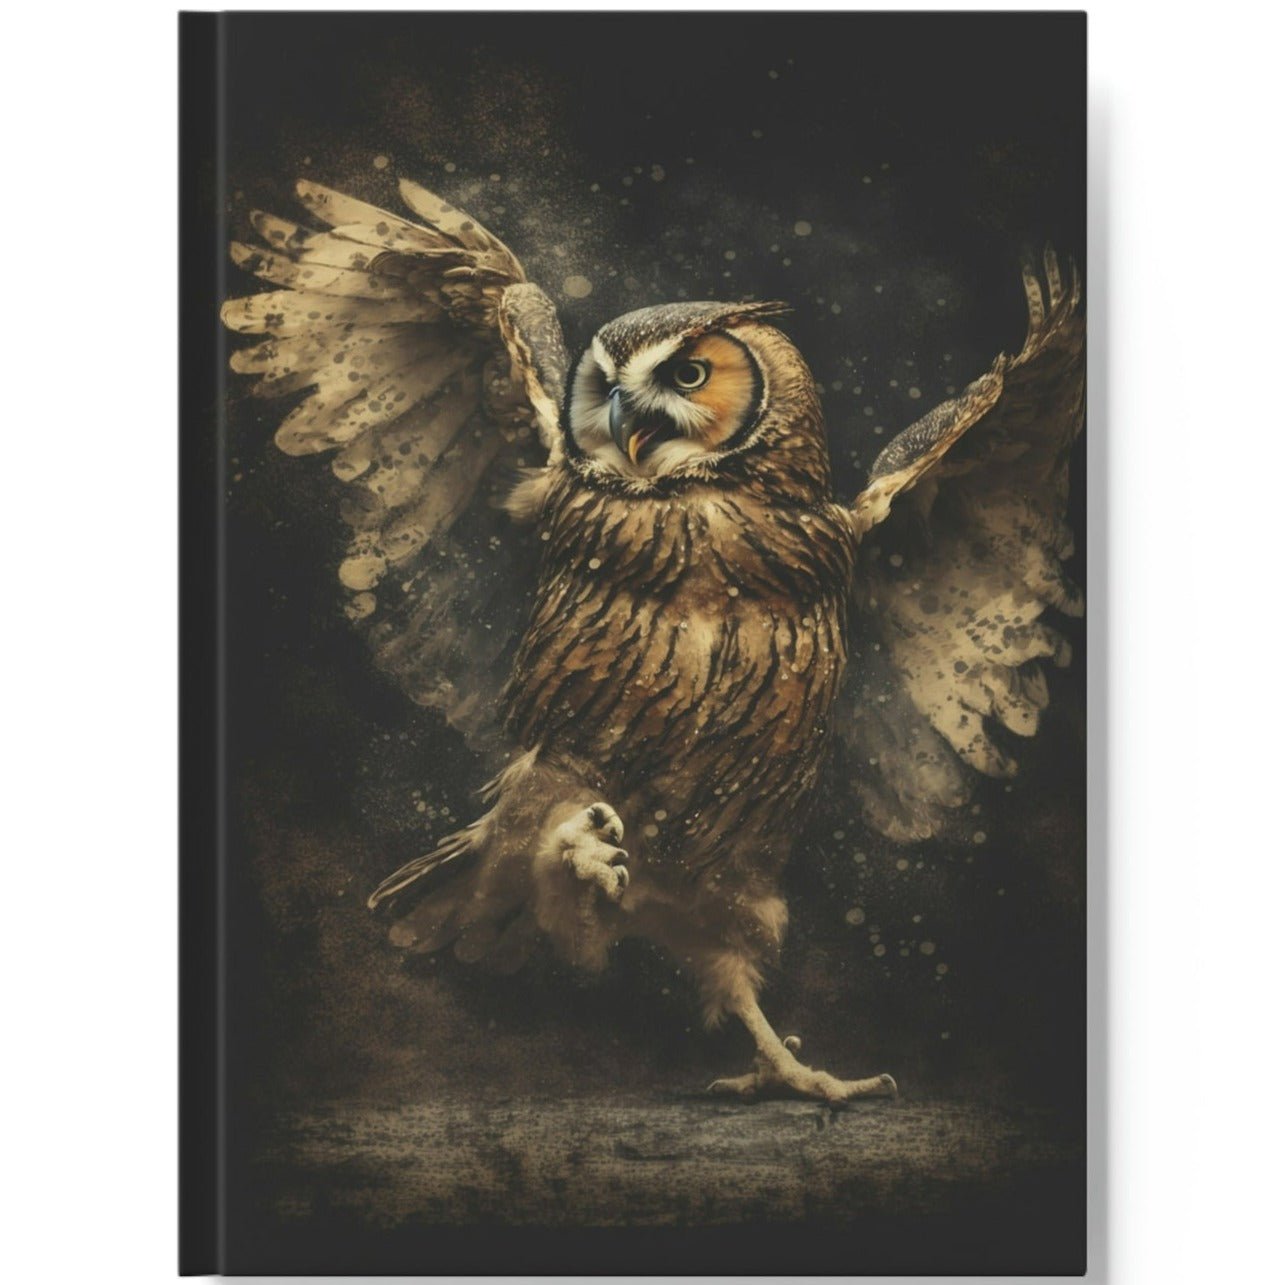 Owl Inspirations - Dancing Owl - Hard Backed Journal